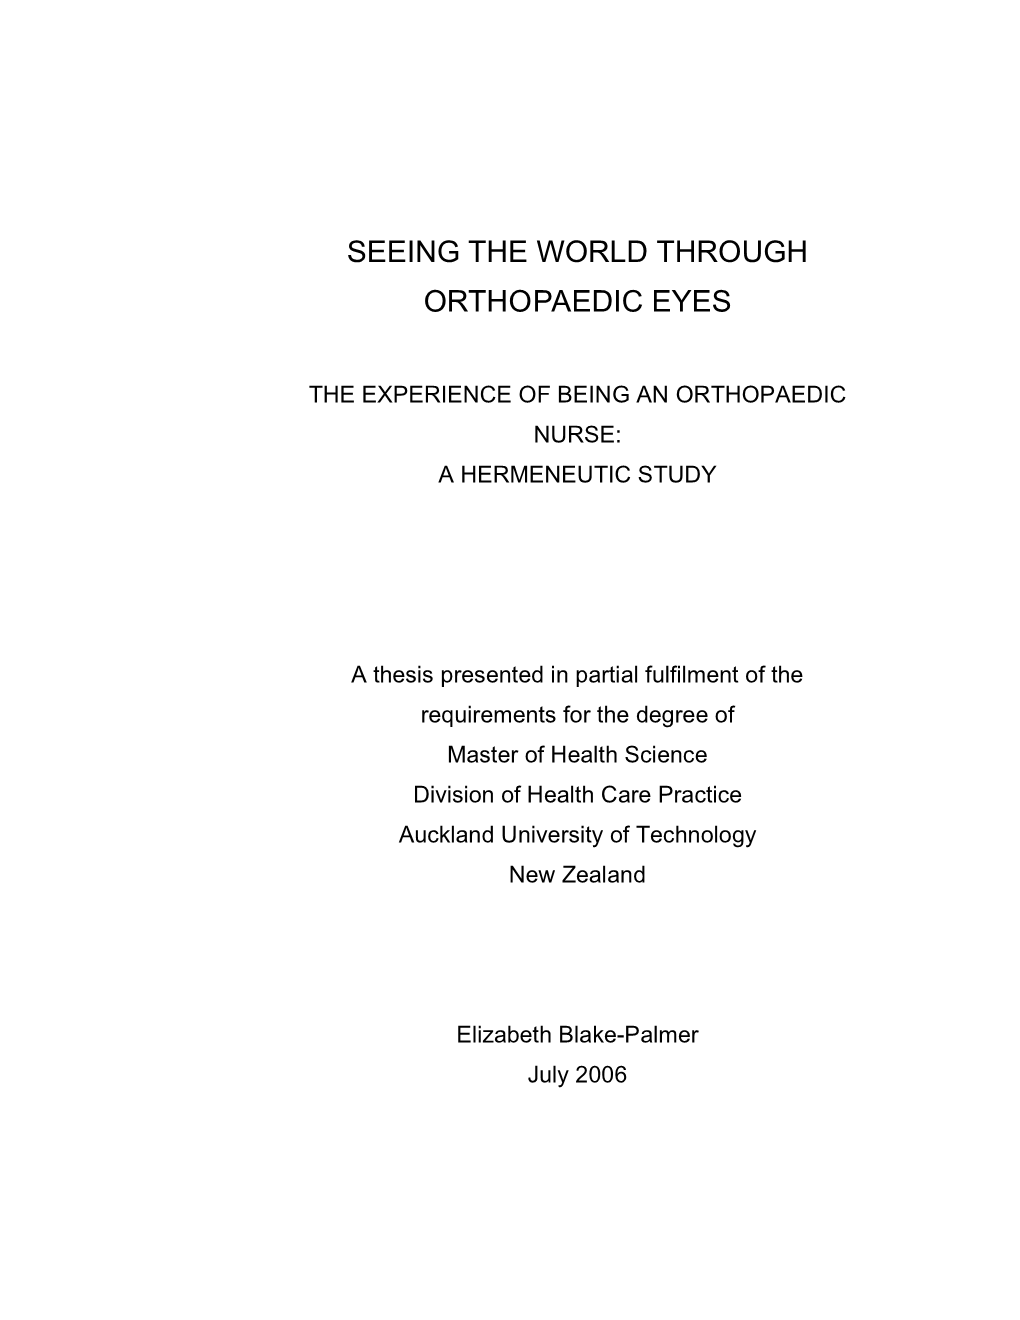 Seeing the World Through Orthopaedic Eyes